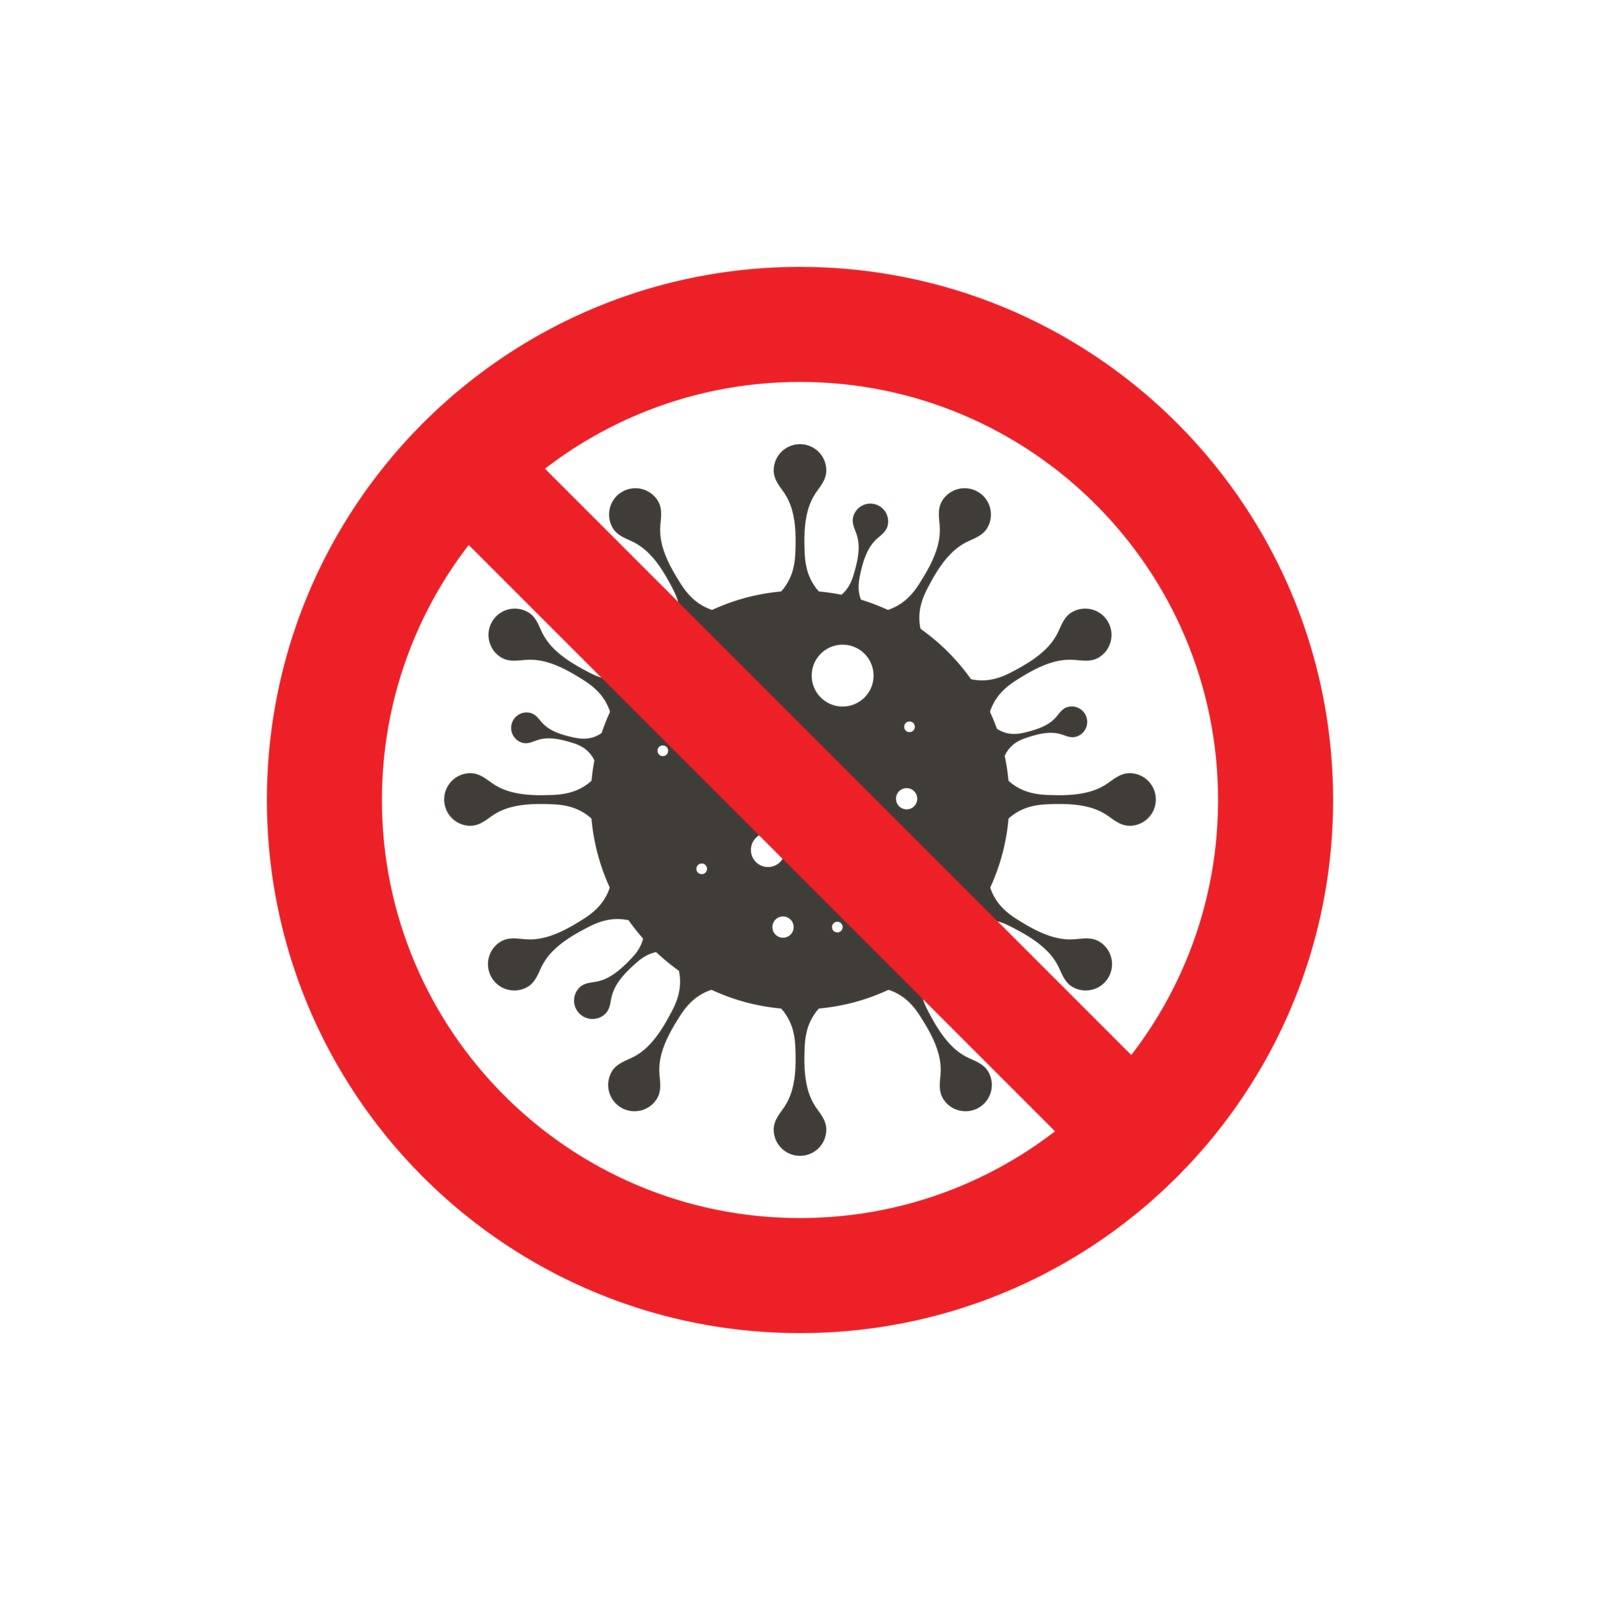 Sign caution coronavirus. Stop coronavirus. Coronavirus outbreak. Pandemic medical concept with dangerous cells.Vector illustration